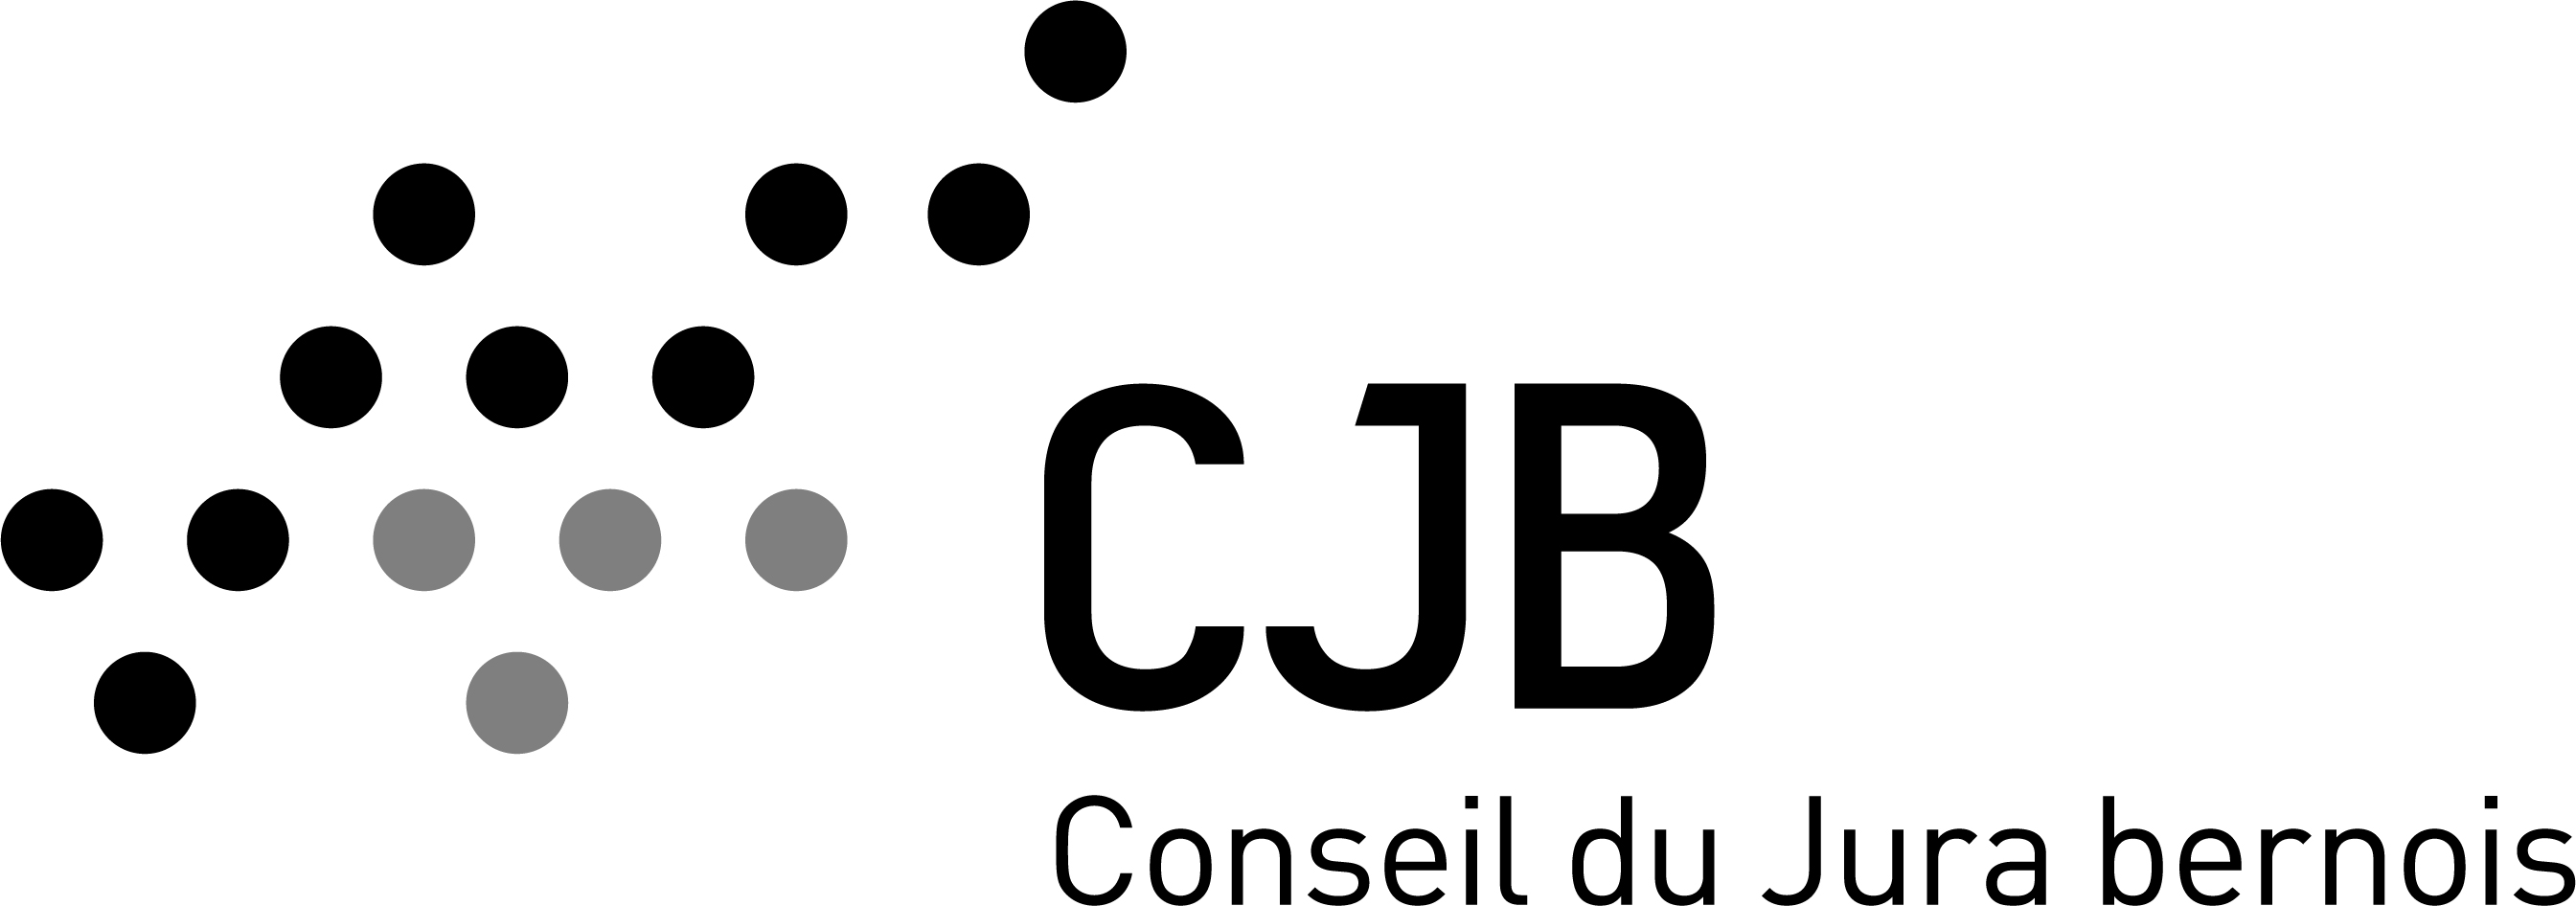 logo CJB 2018 logo NB Contacts